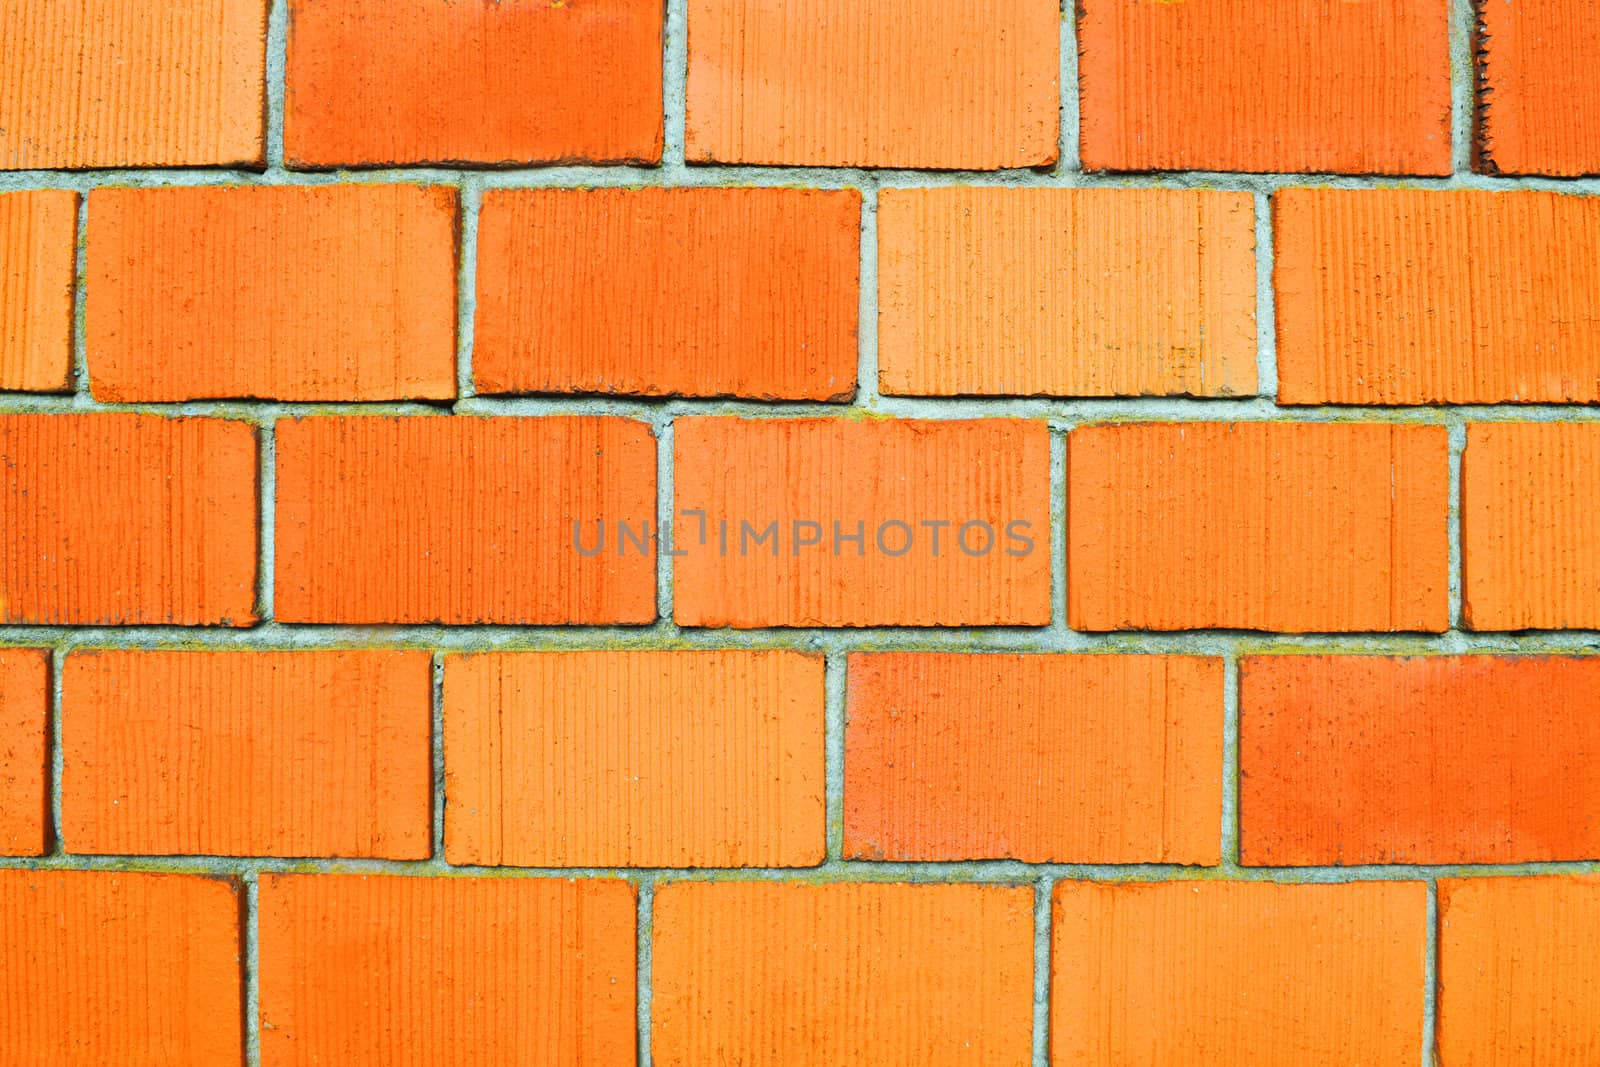 Brick wall by Yaurinko